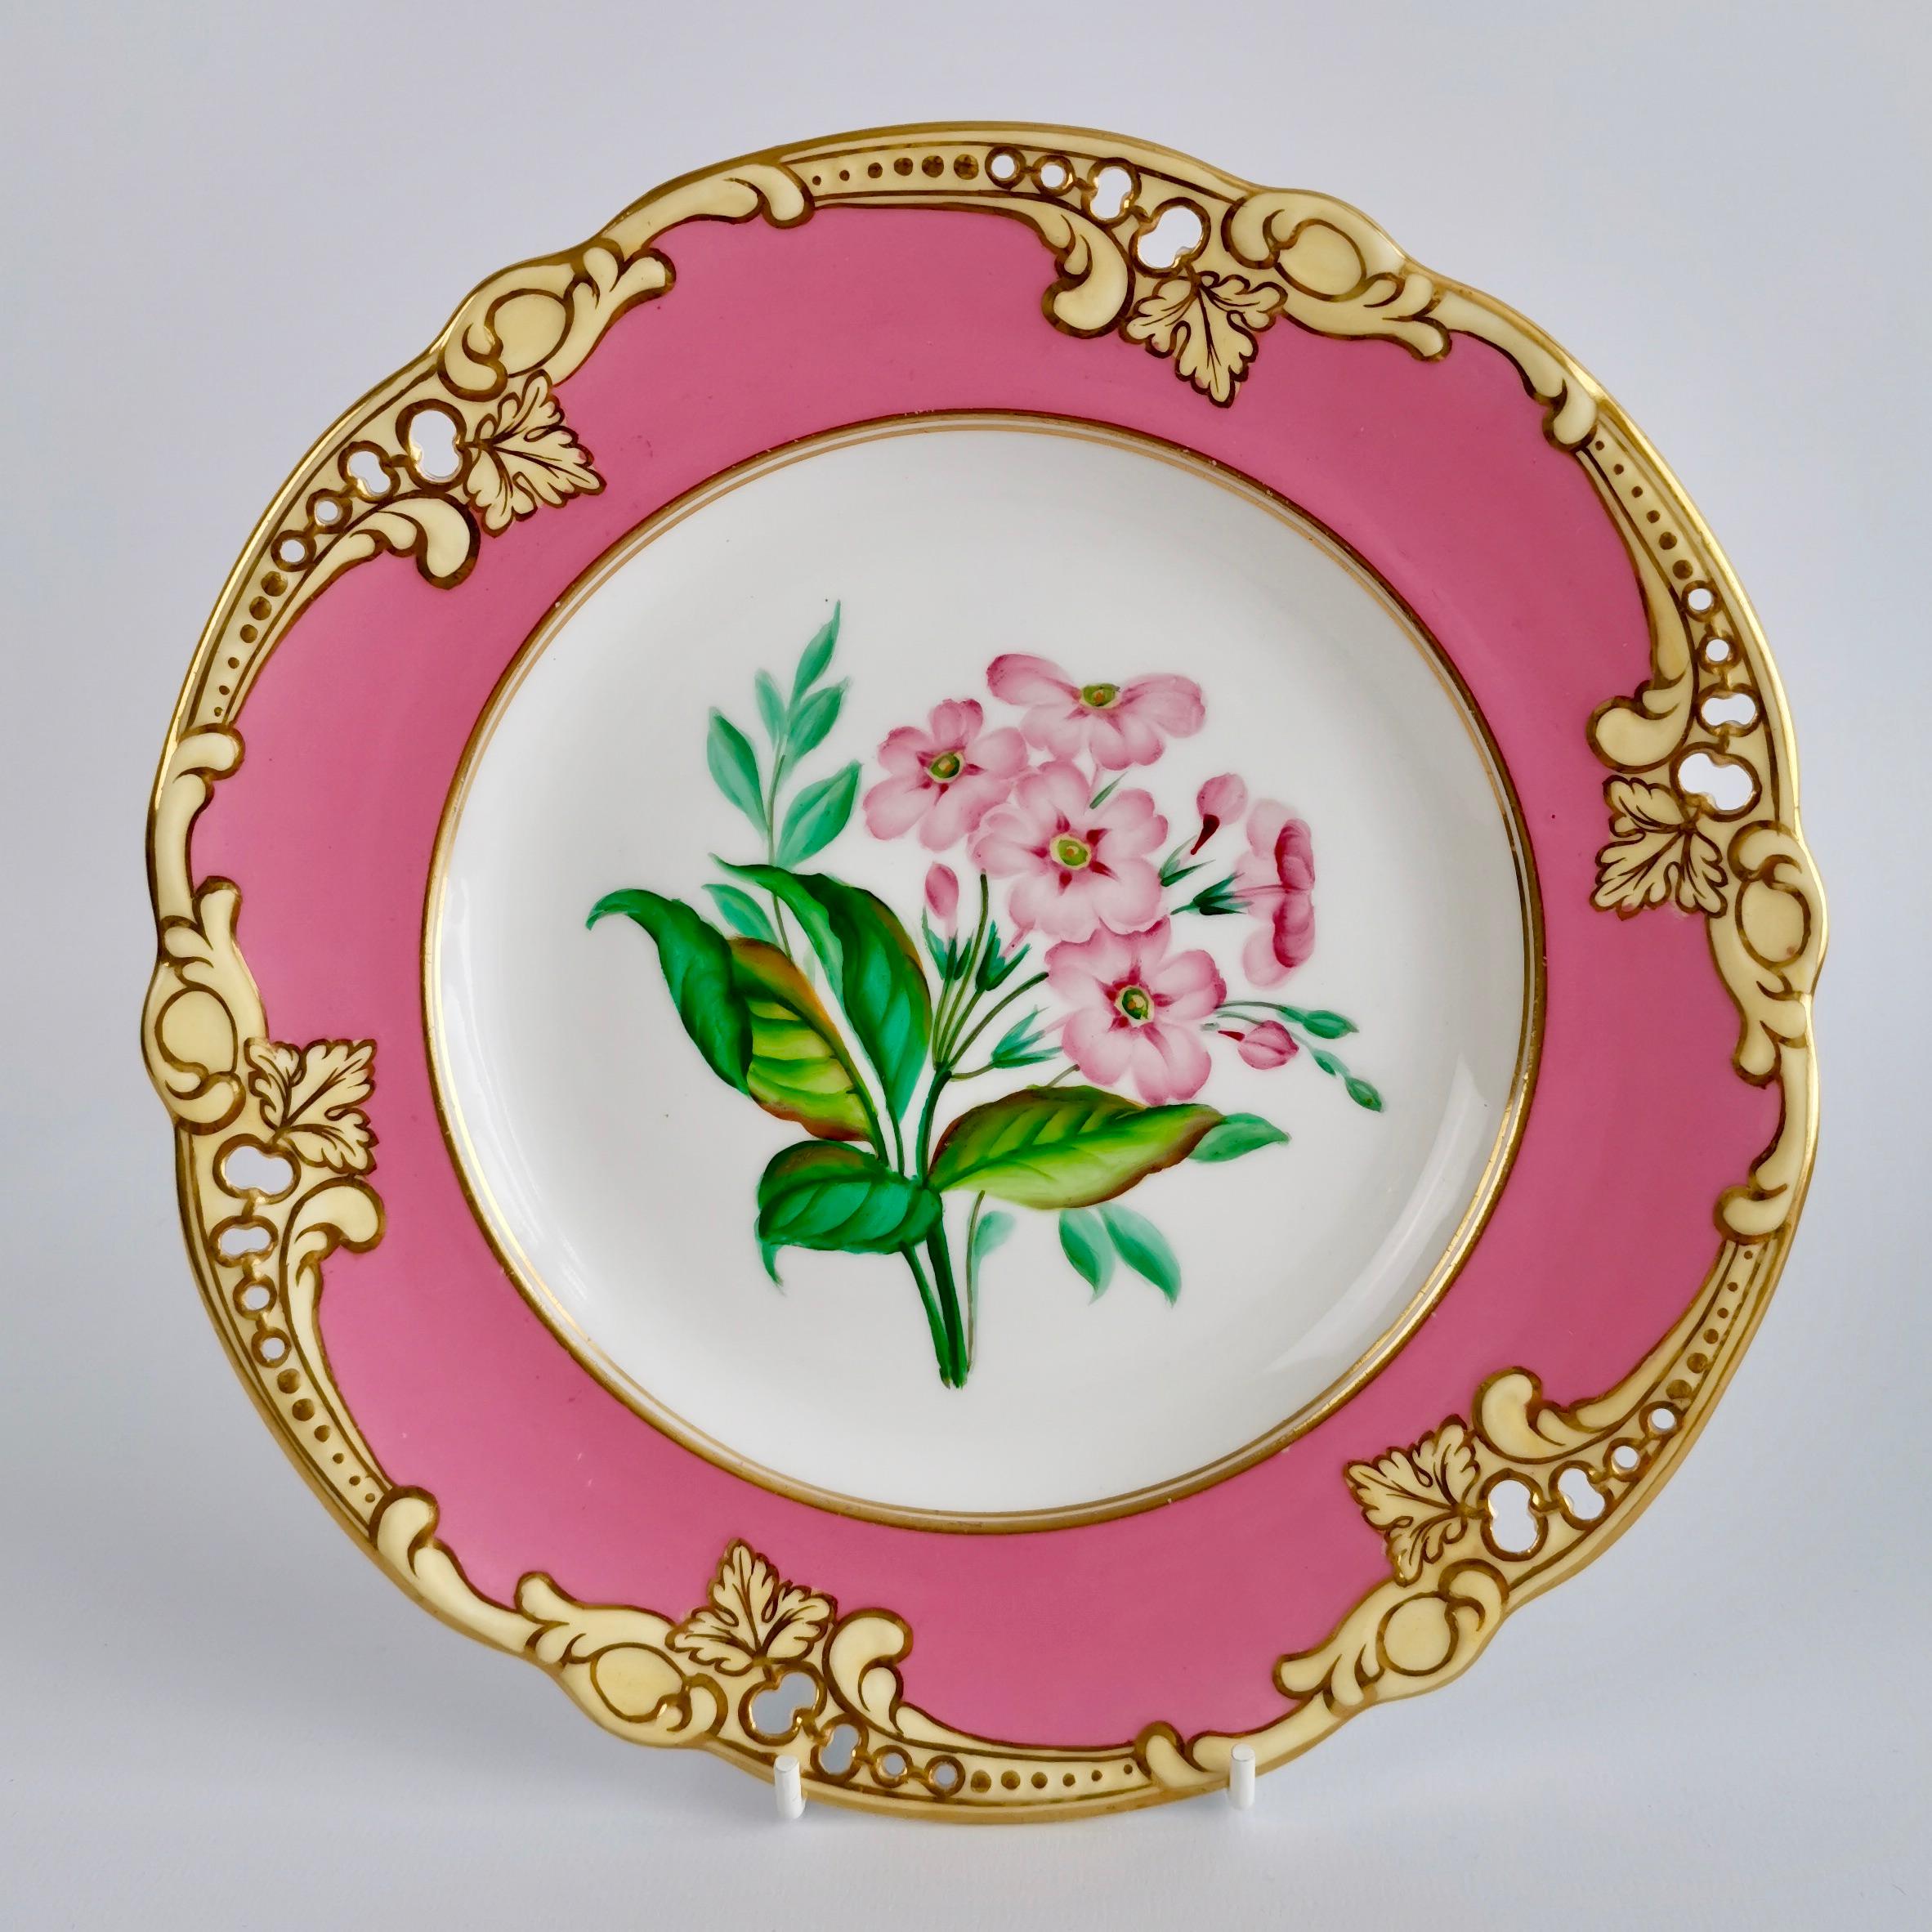 Brown Westhead & Moore Porcelain Dessert Service, Hot Pink Botanical, circa 1860 4